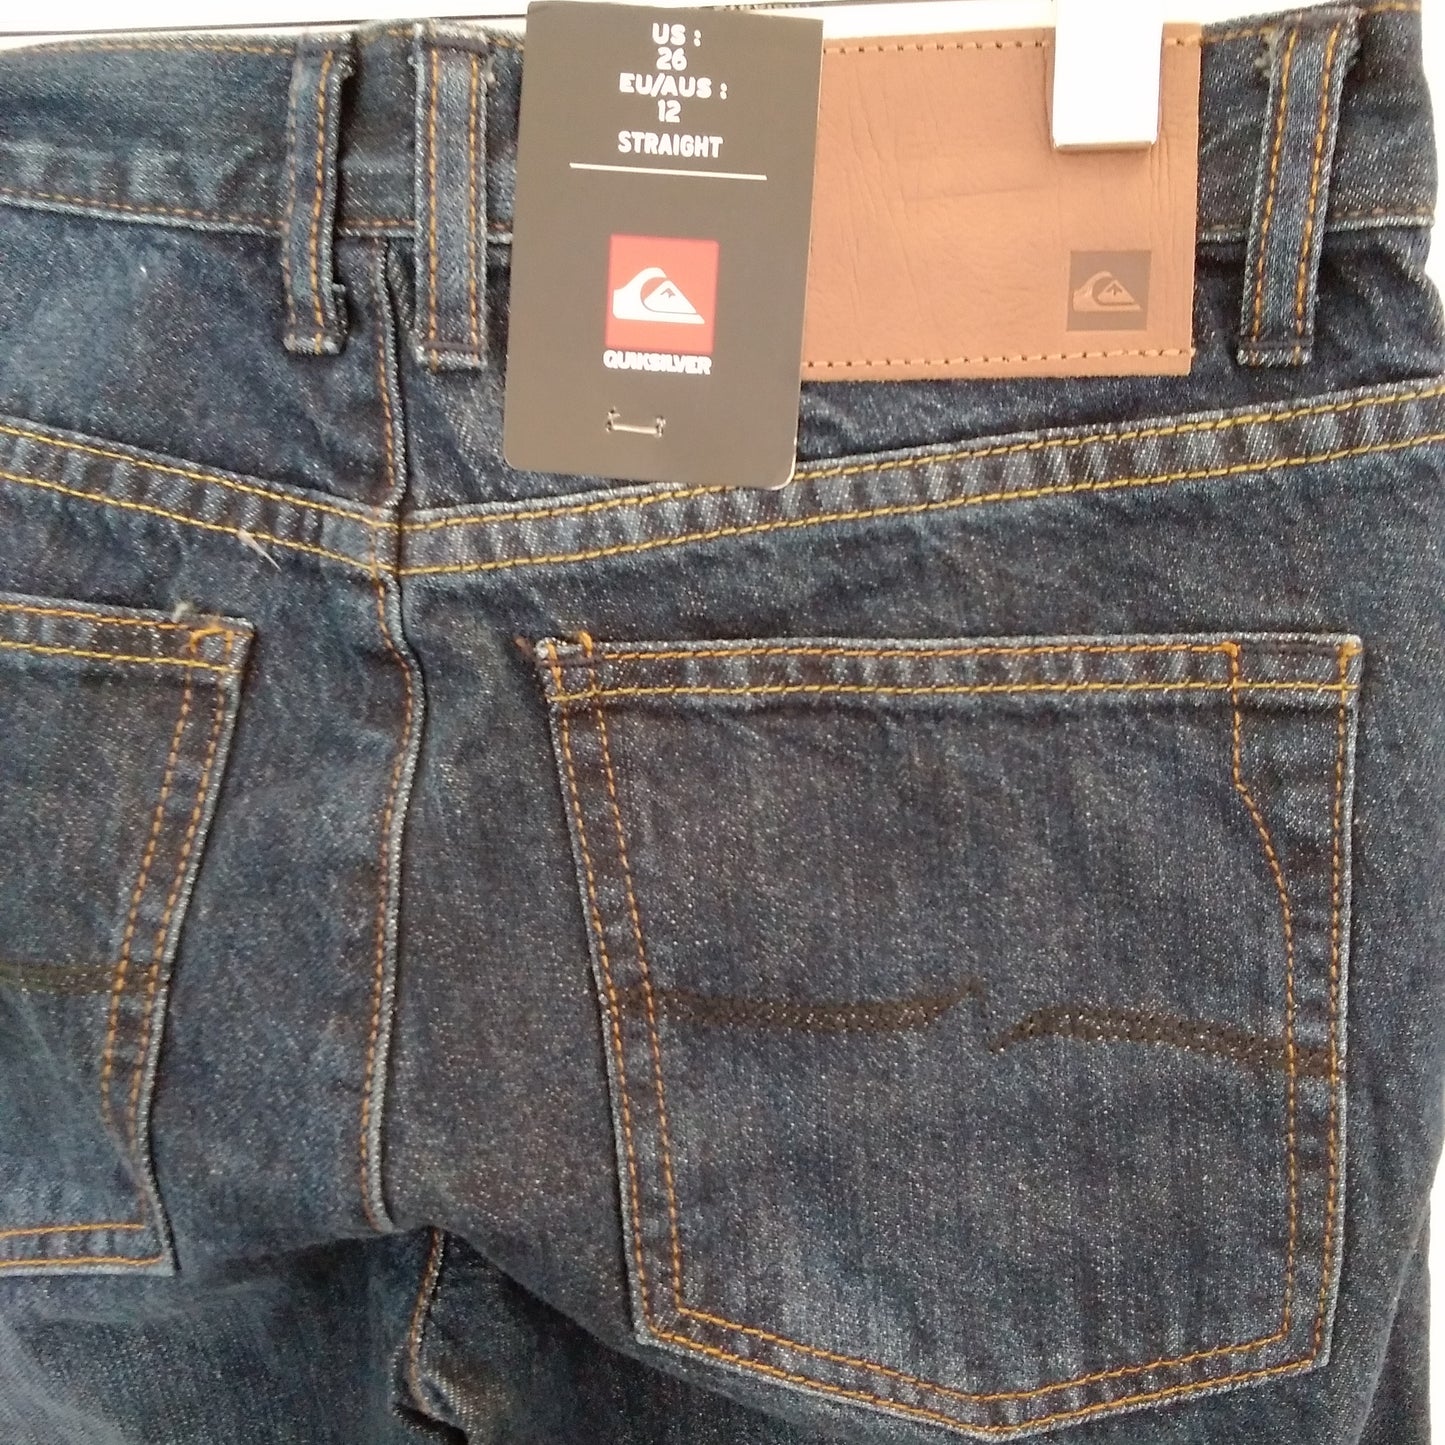 NWT - Quicksilver Youth Straight Cut Denim Jeans - EU/AUS:12 / US: 26